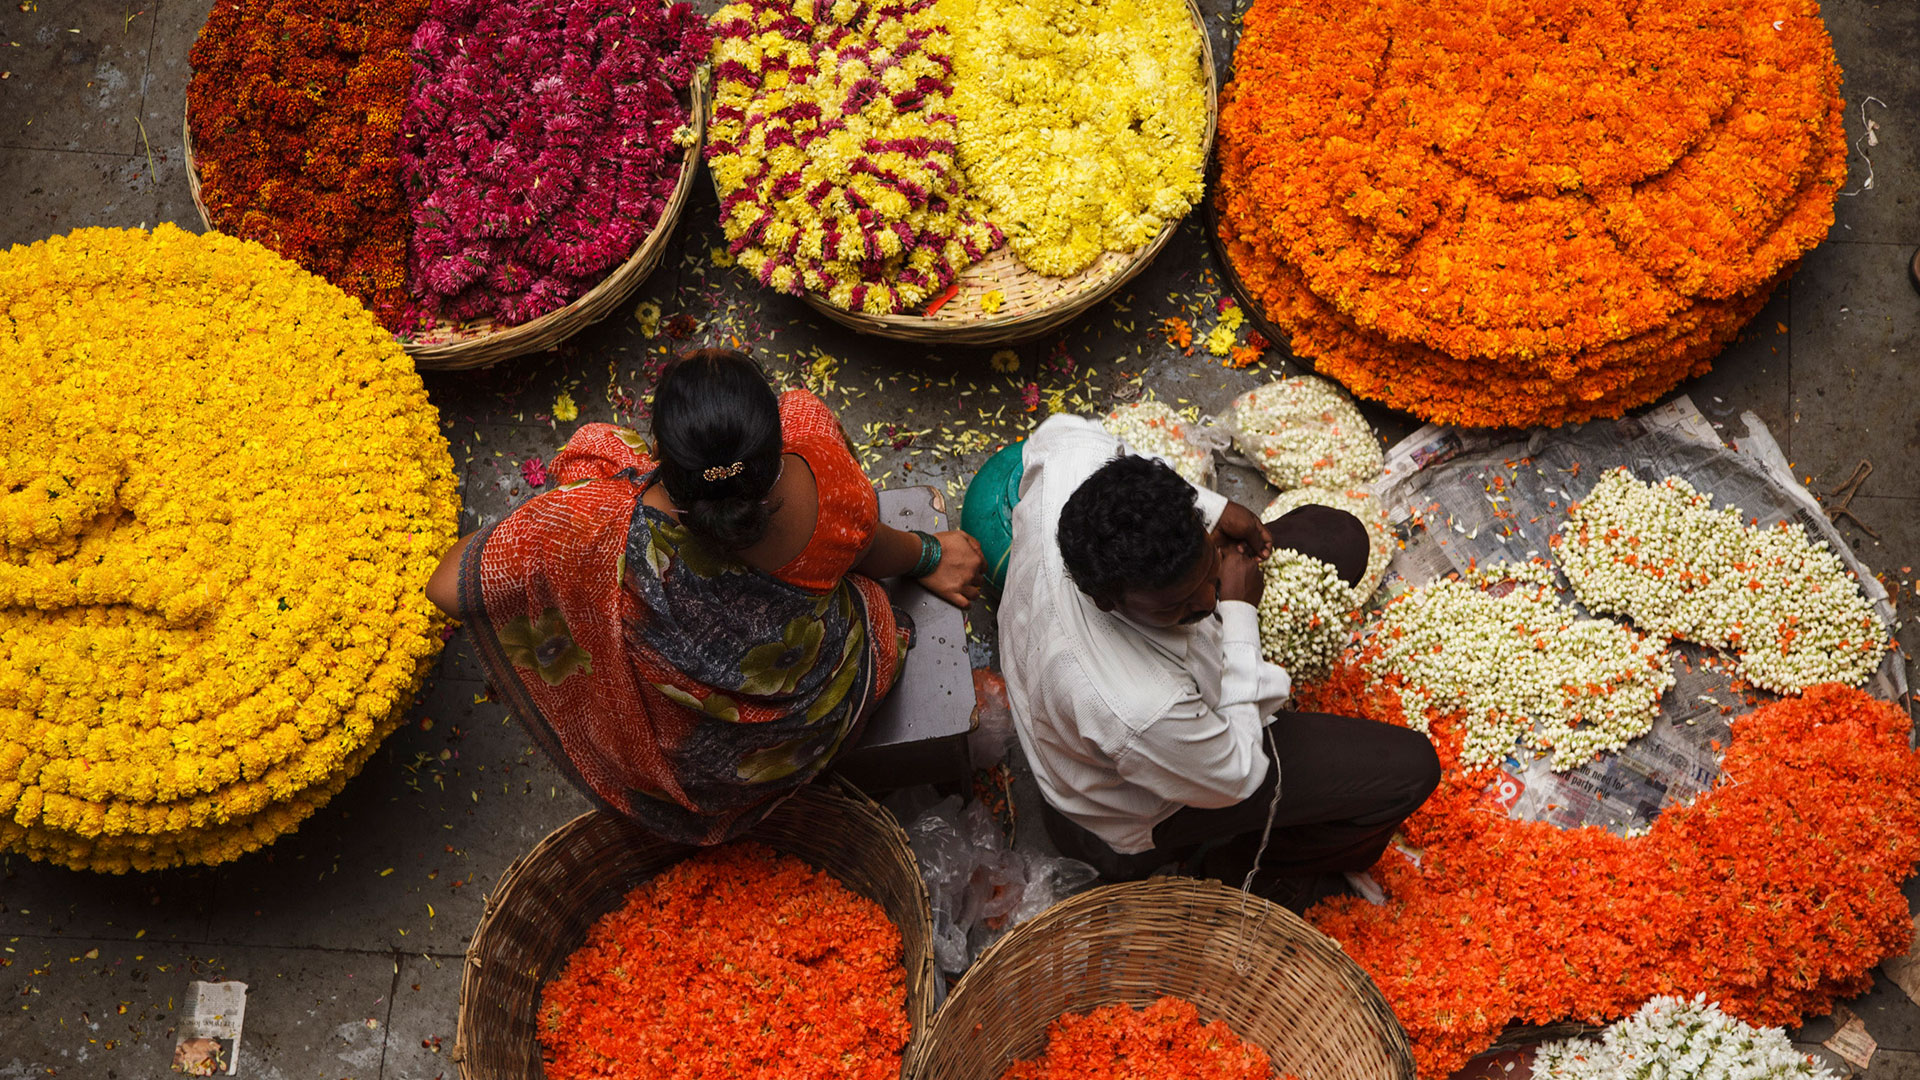 Indian flower sellers